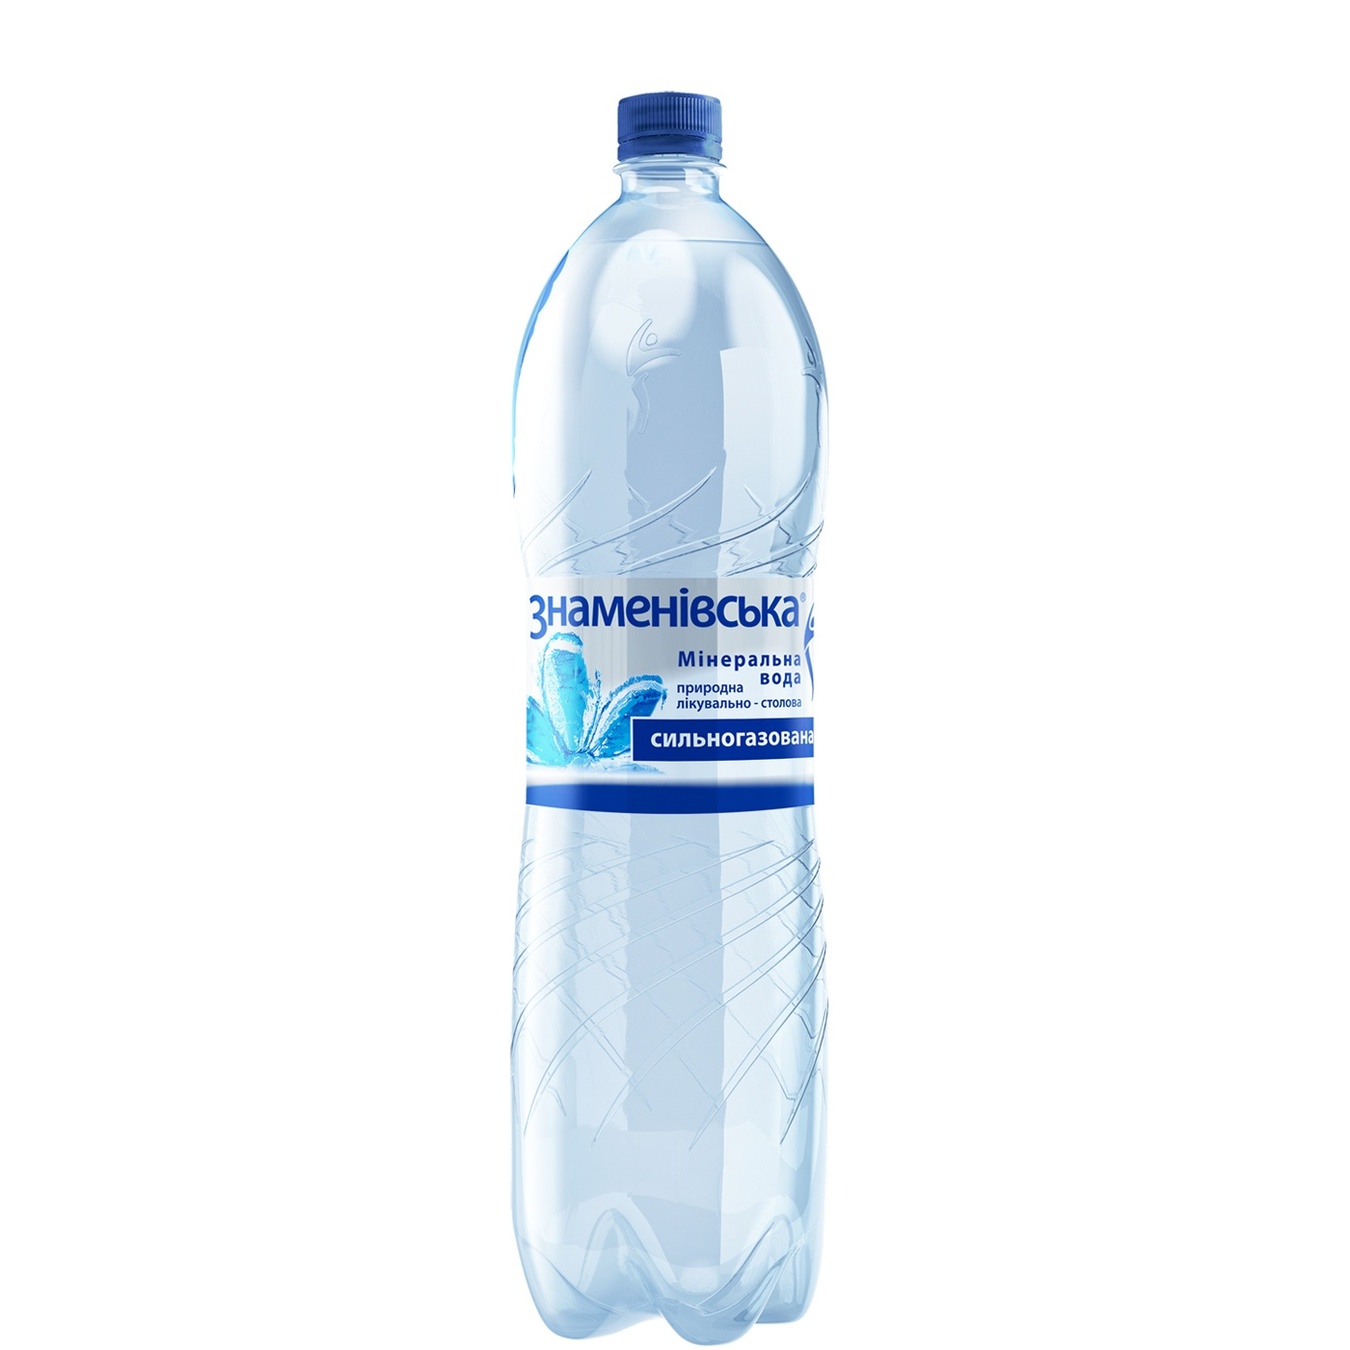 Znamenivska strongly carbonated mineral water 1.5l